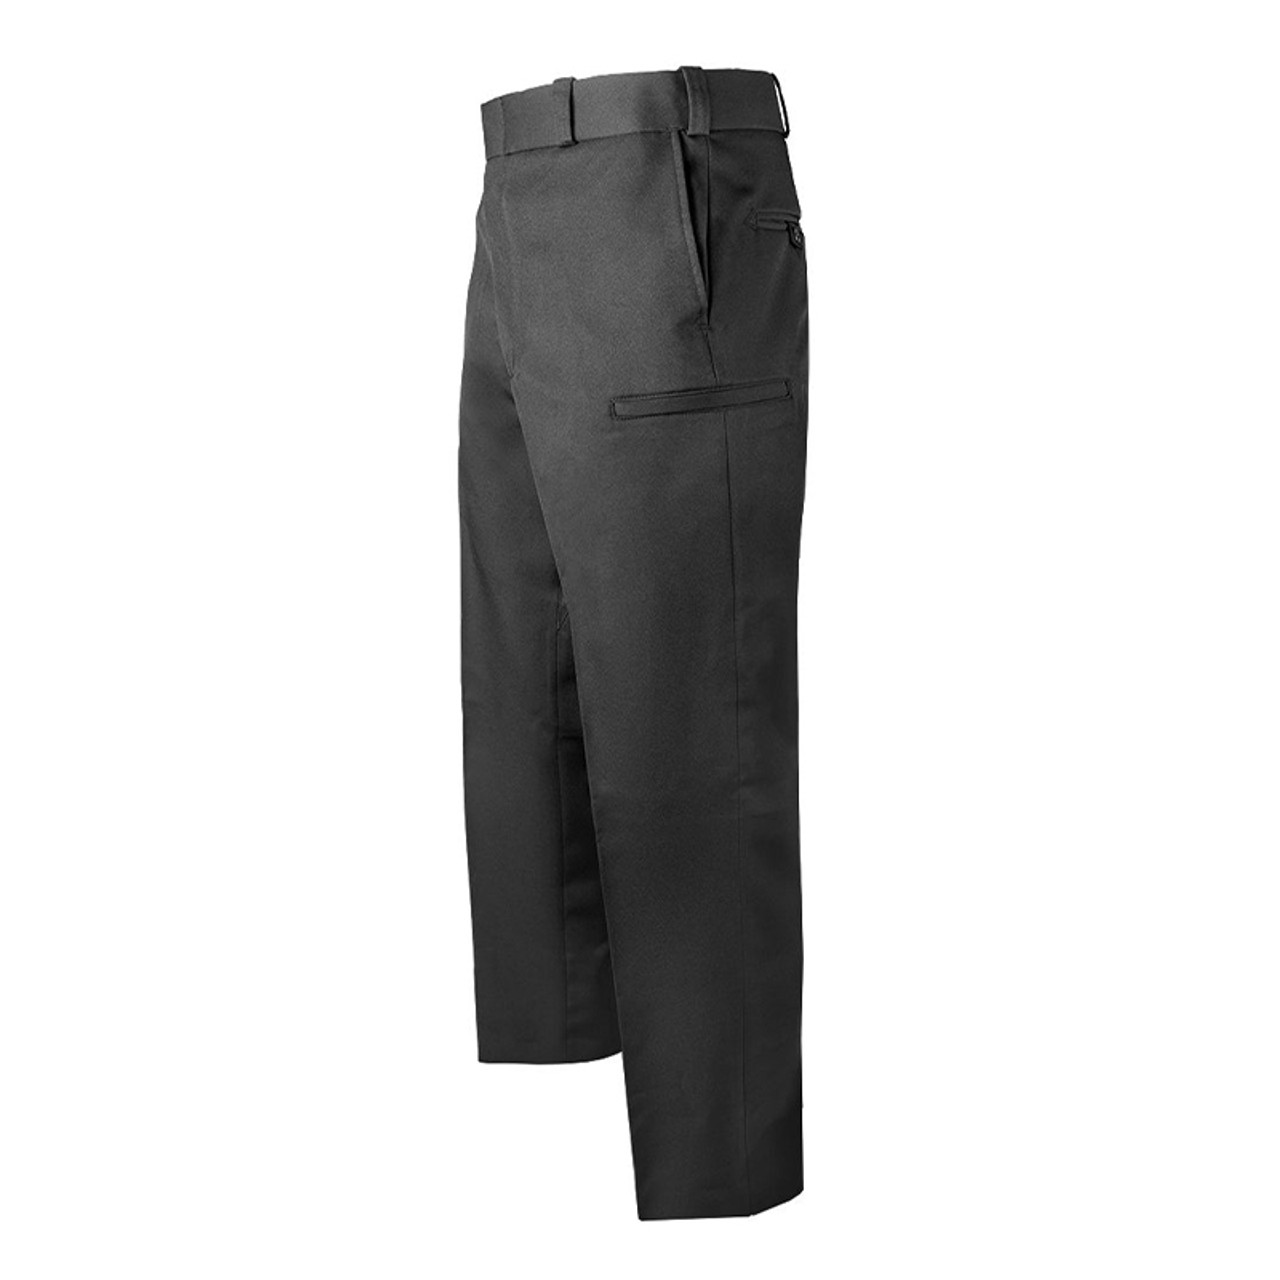 Cheap Uniform Pants for Employees | WaitStuff Uniforms